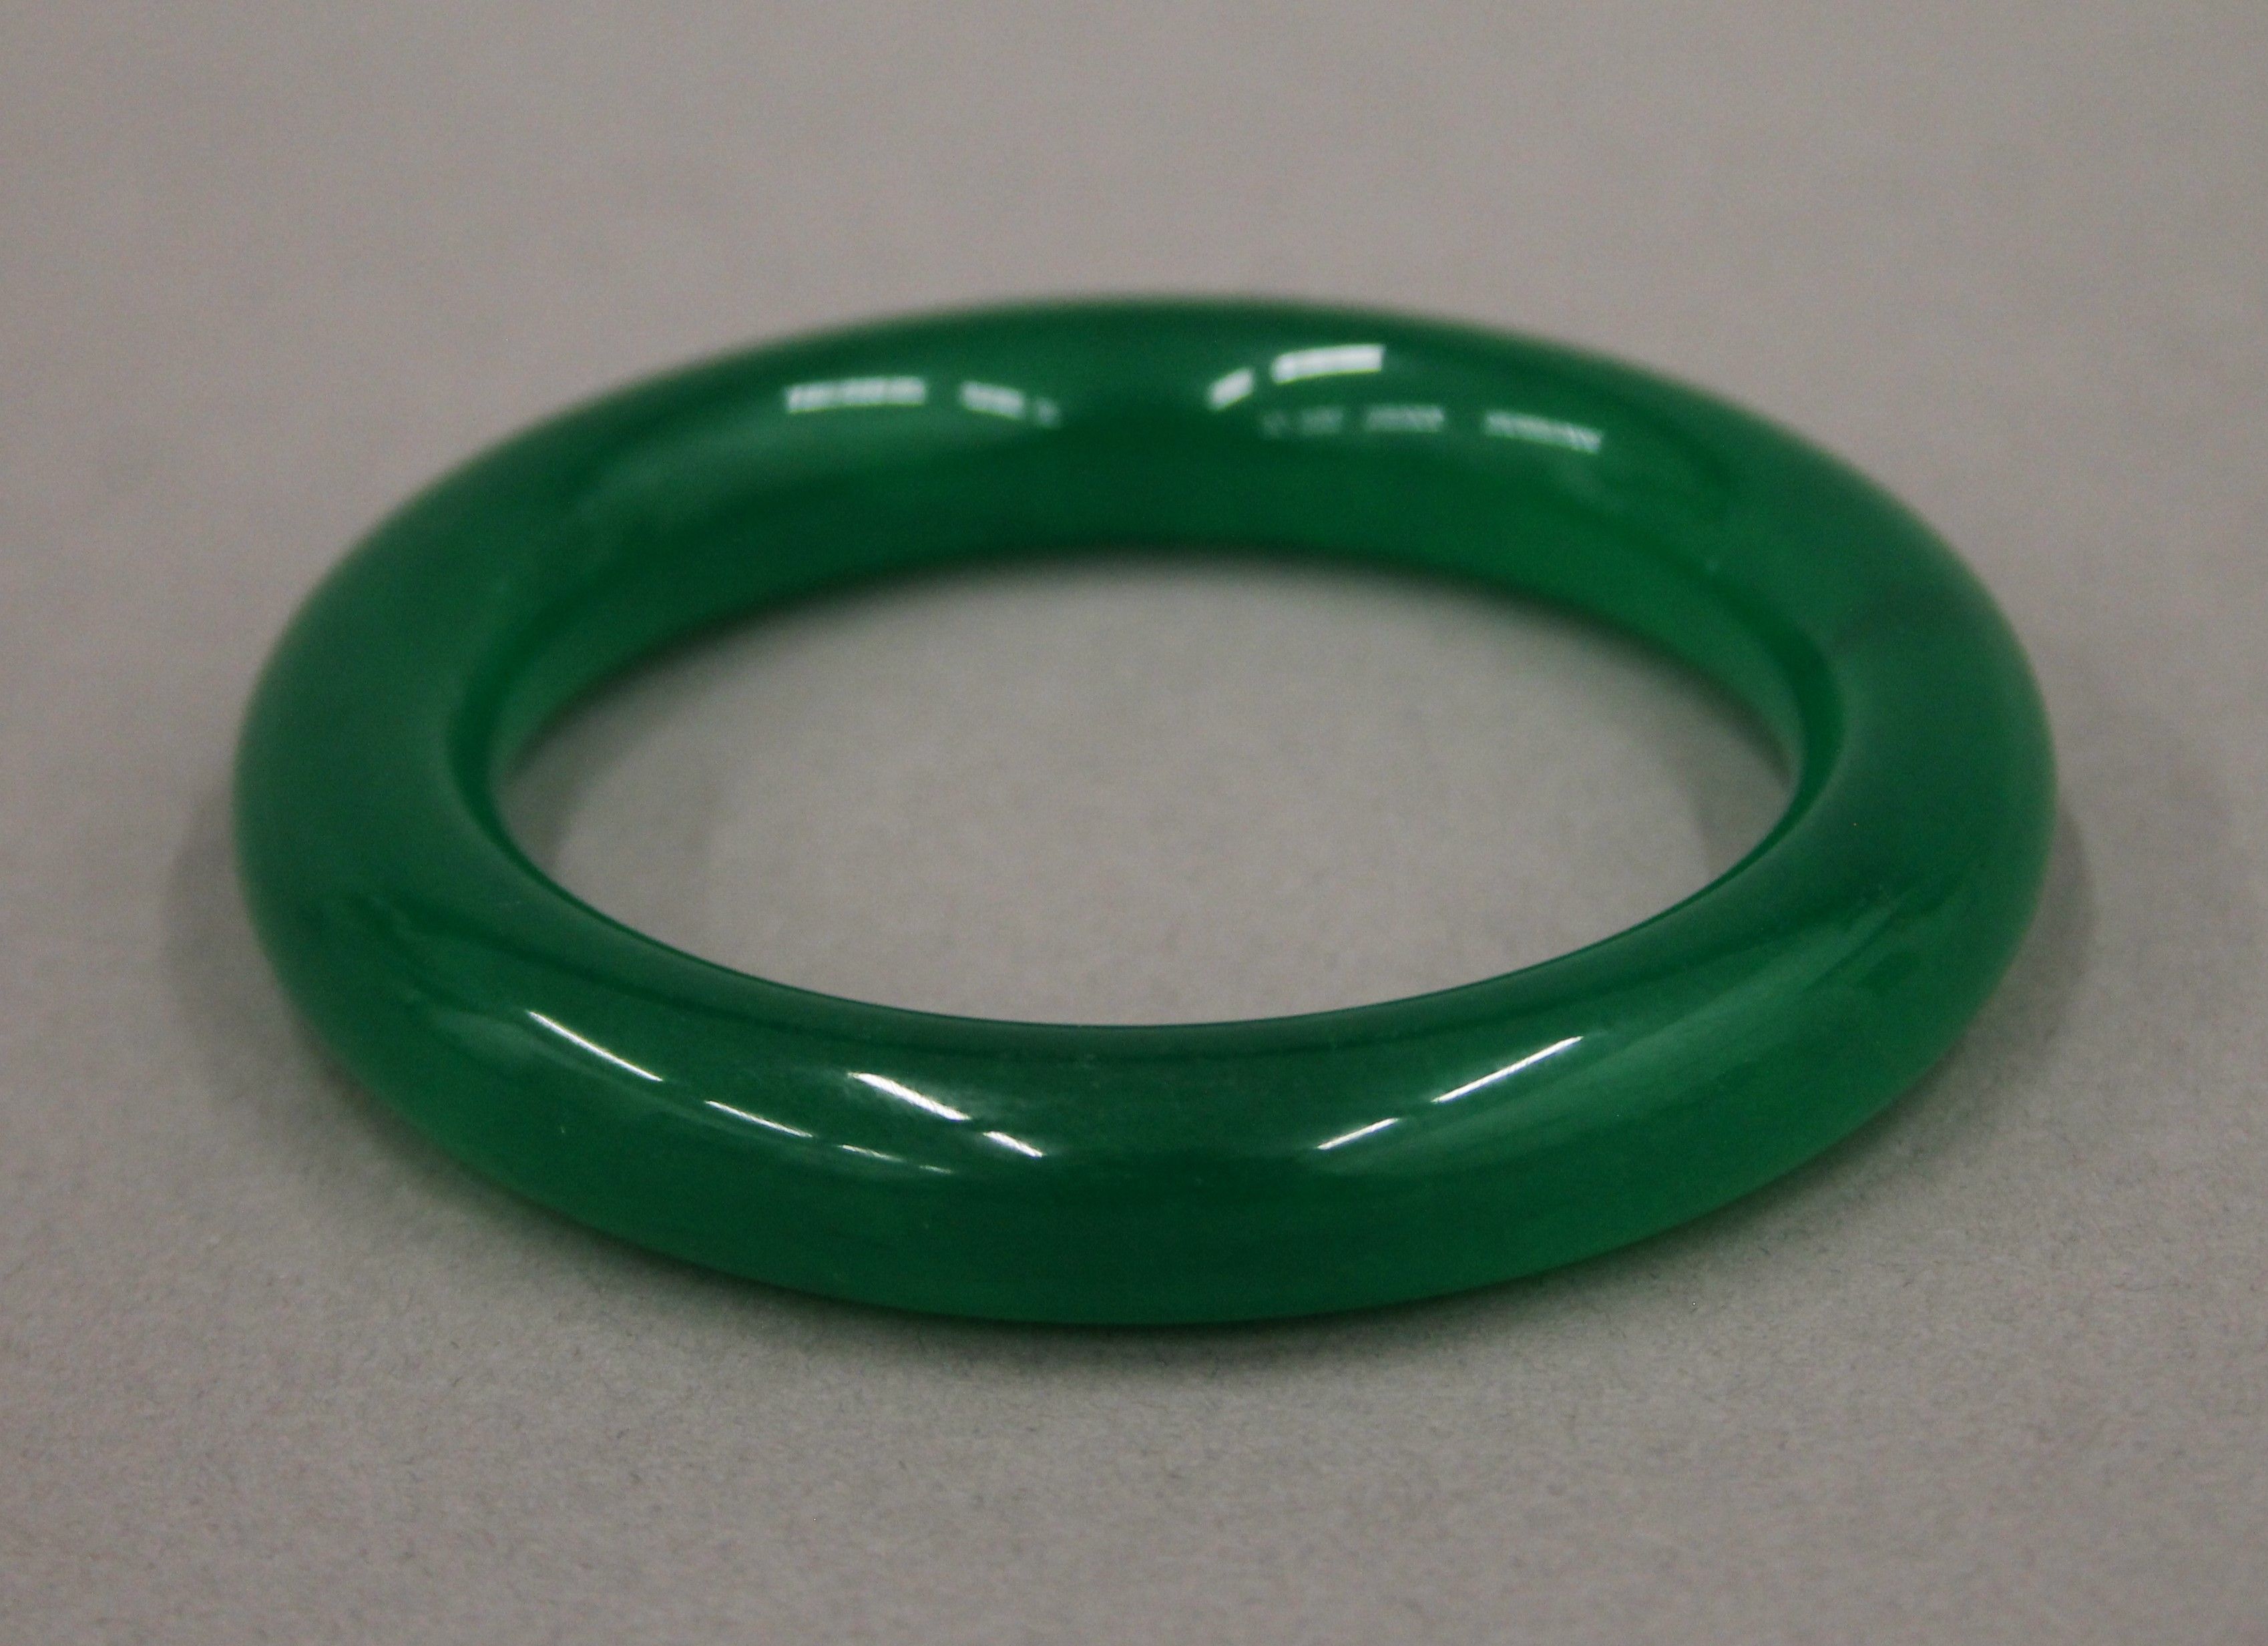 An apple green jade bangle. Approximately 6 cm interior diameter.